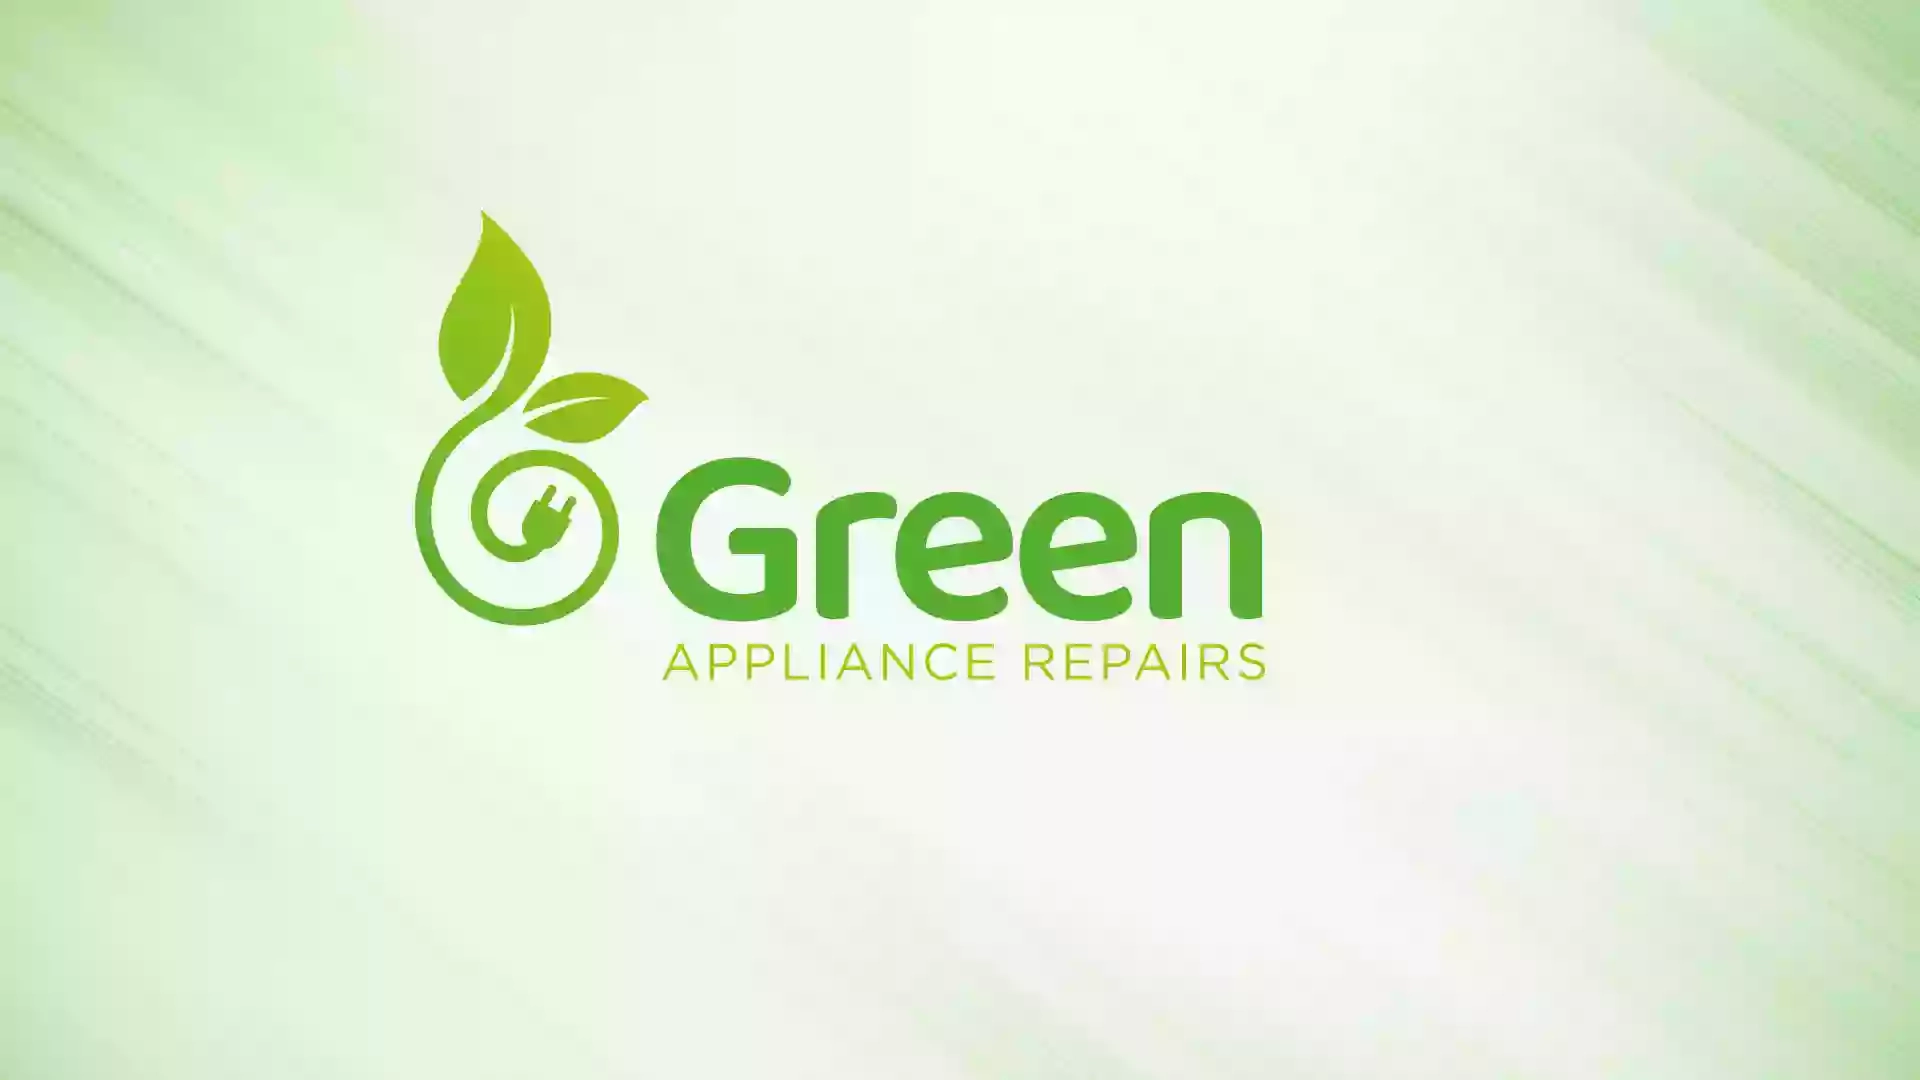 Green appliance repairs